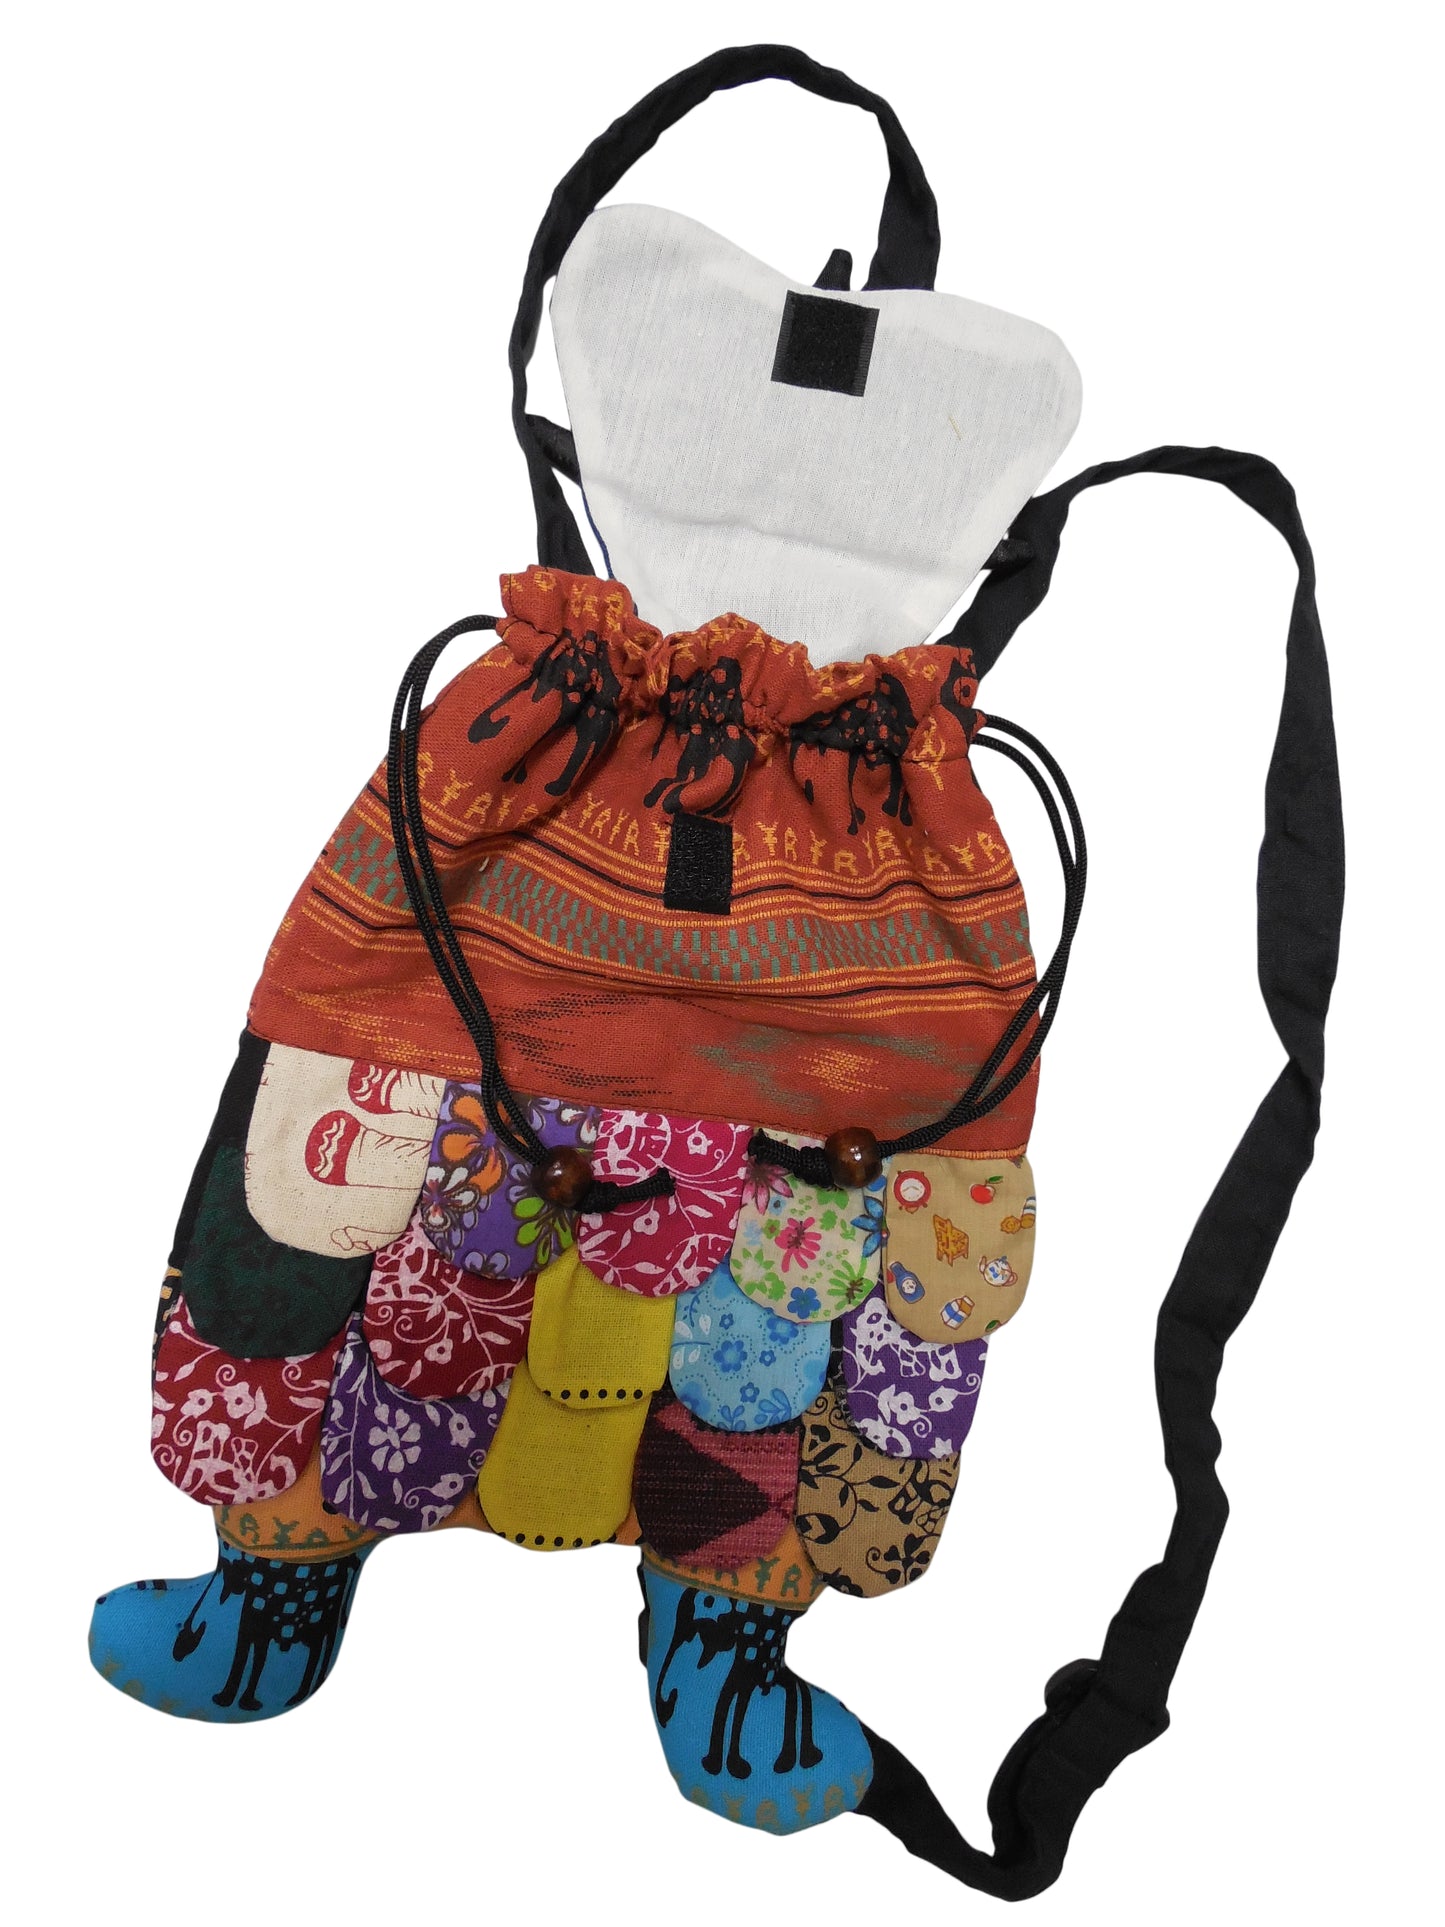 Handmade Sling Bag Woven Patchwork Owl Hippie Cute Backpack Assorted - Ambali Fashion Backpacks accessory, beach, bohemian, boho, bookbag, canvas, casual, ethnic, gift, handmade, new age, sat